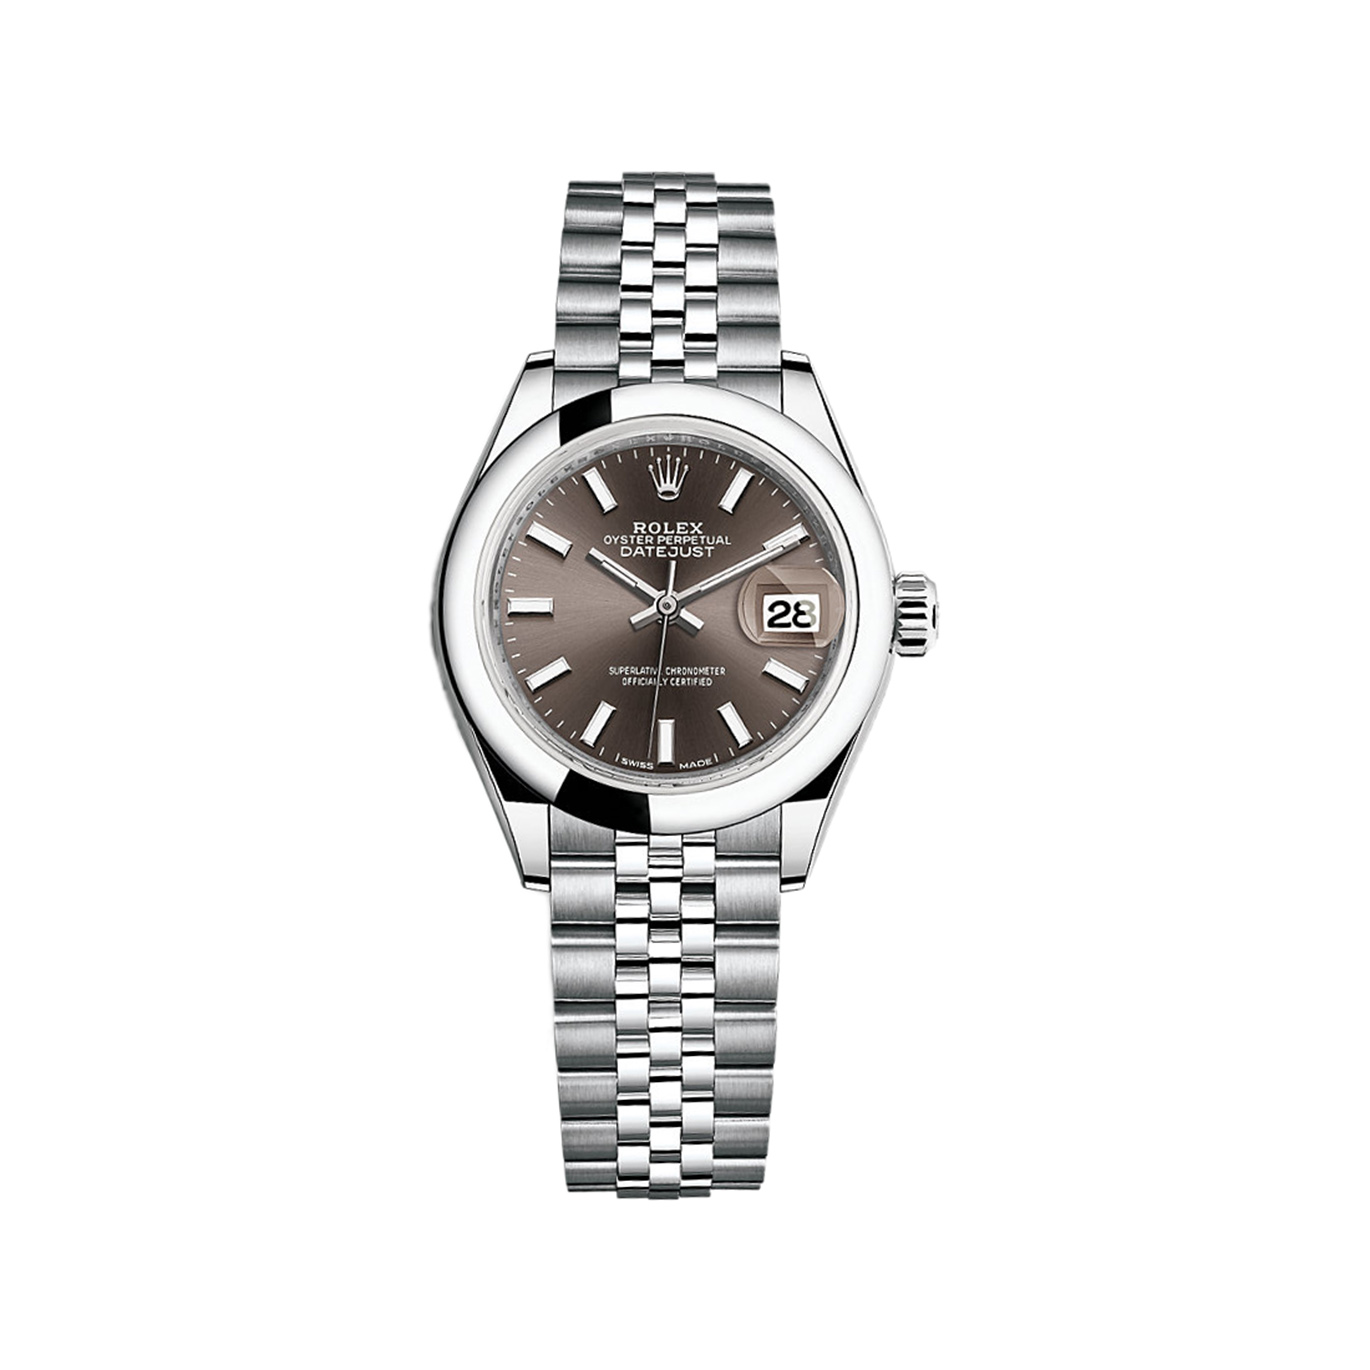 Lady-Datejust 28 279160 Stainless Steel Watch (Dark Grey)